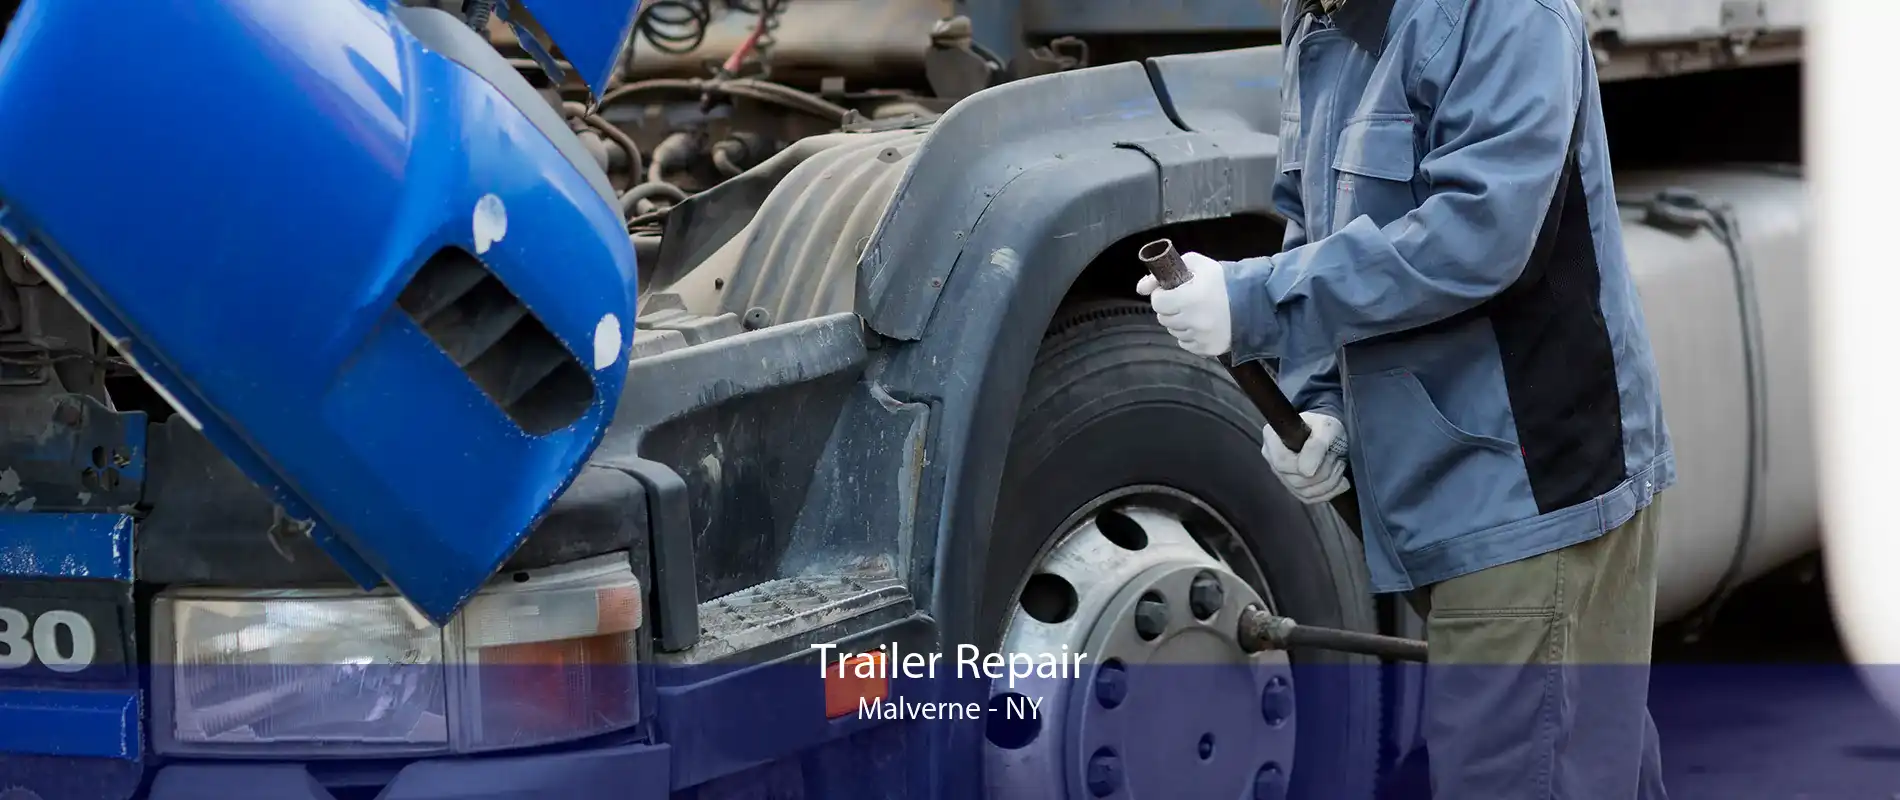 Trailer Repair Malverne - NY